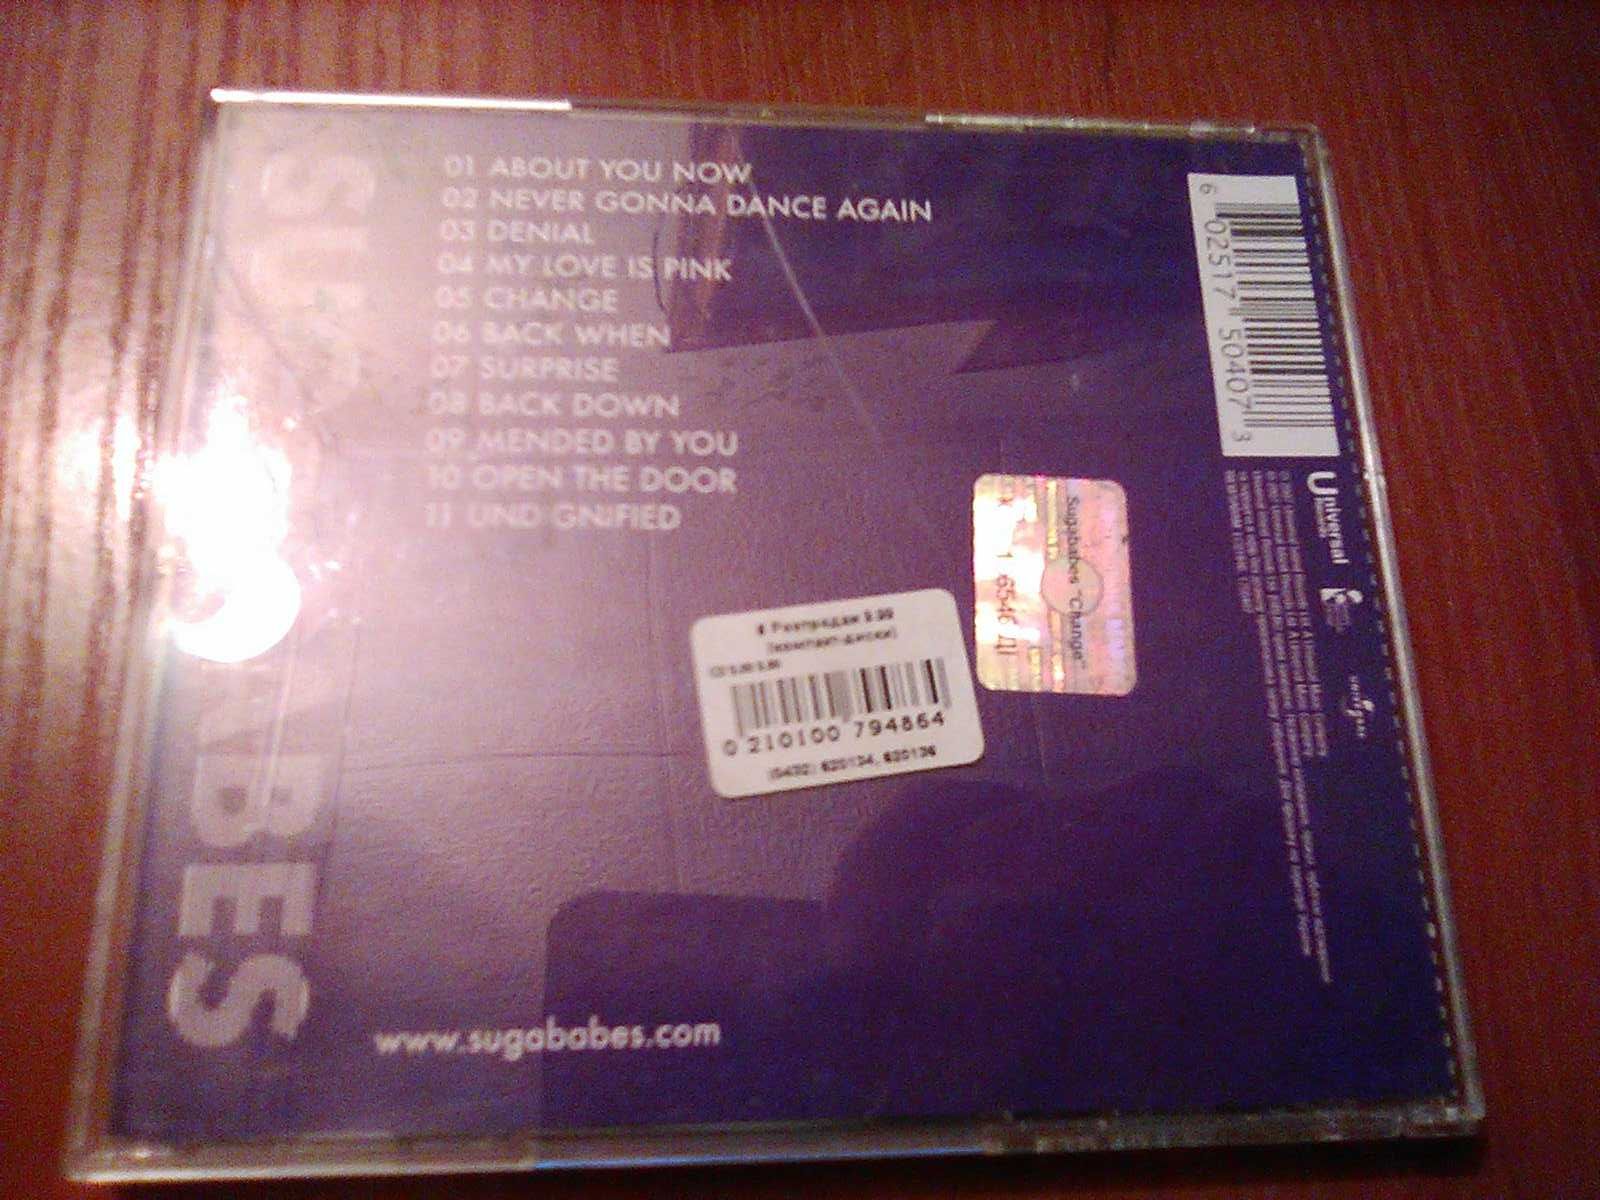 Музыкальный CD Sugababes альбом Change 2007 год